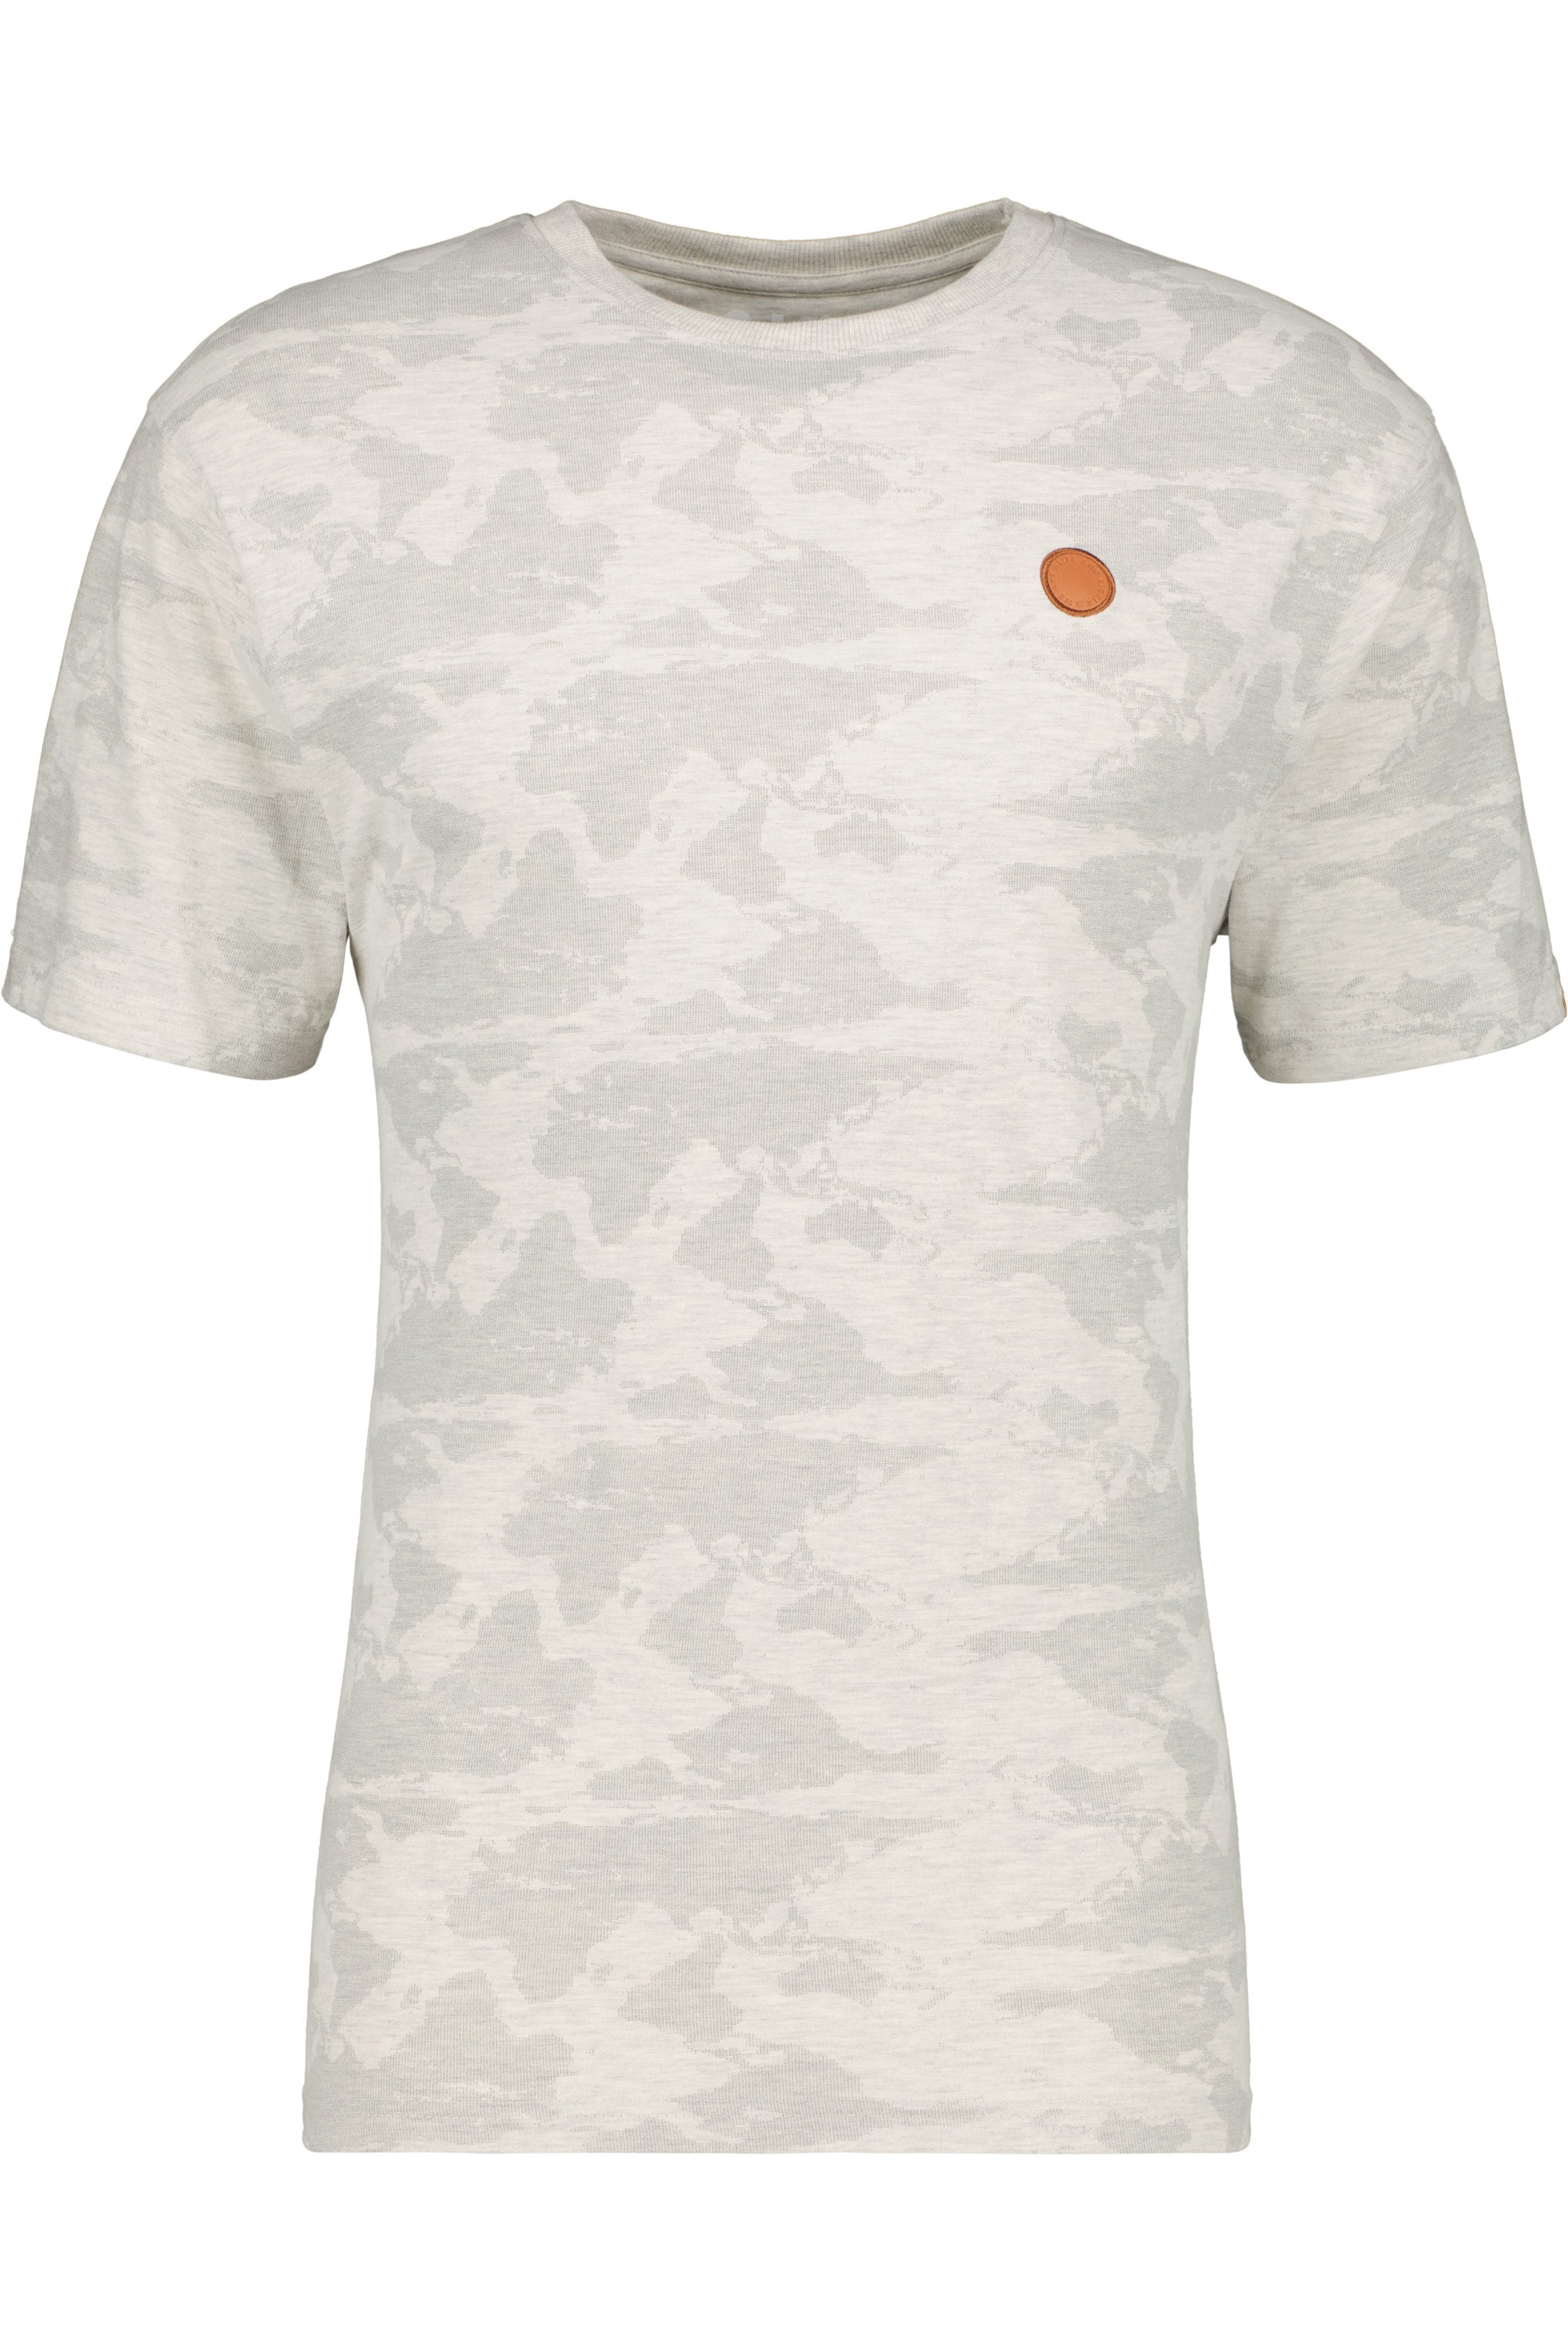 Alloverprint-Design für Männer mit dem T-Shirt NicAK B Grau